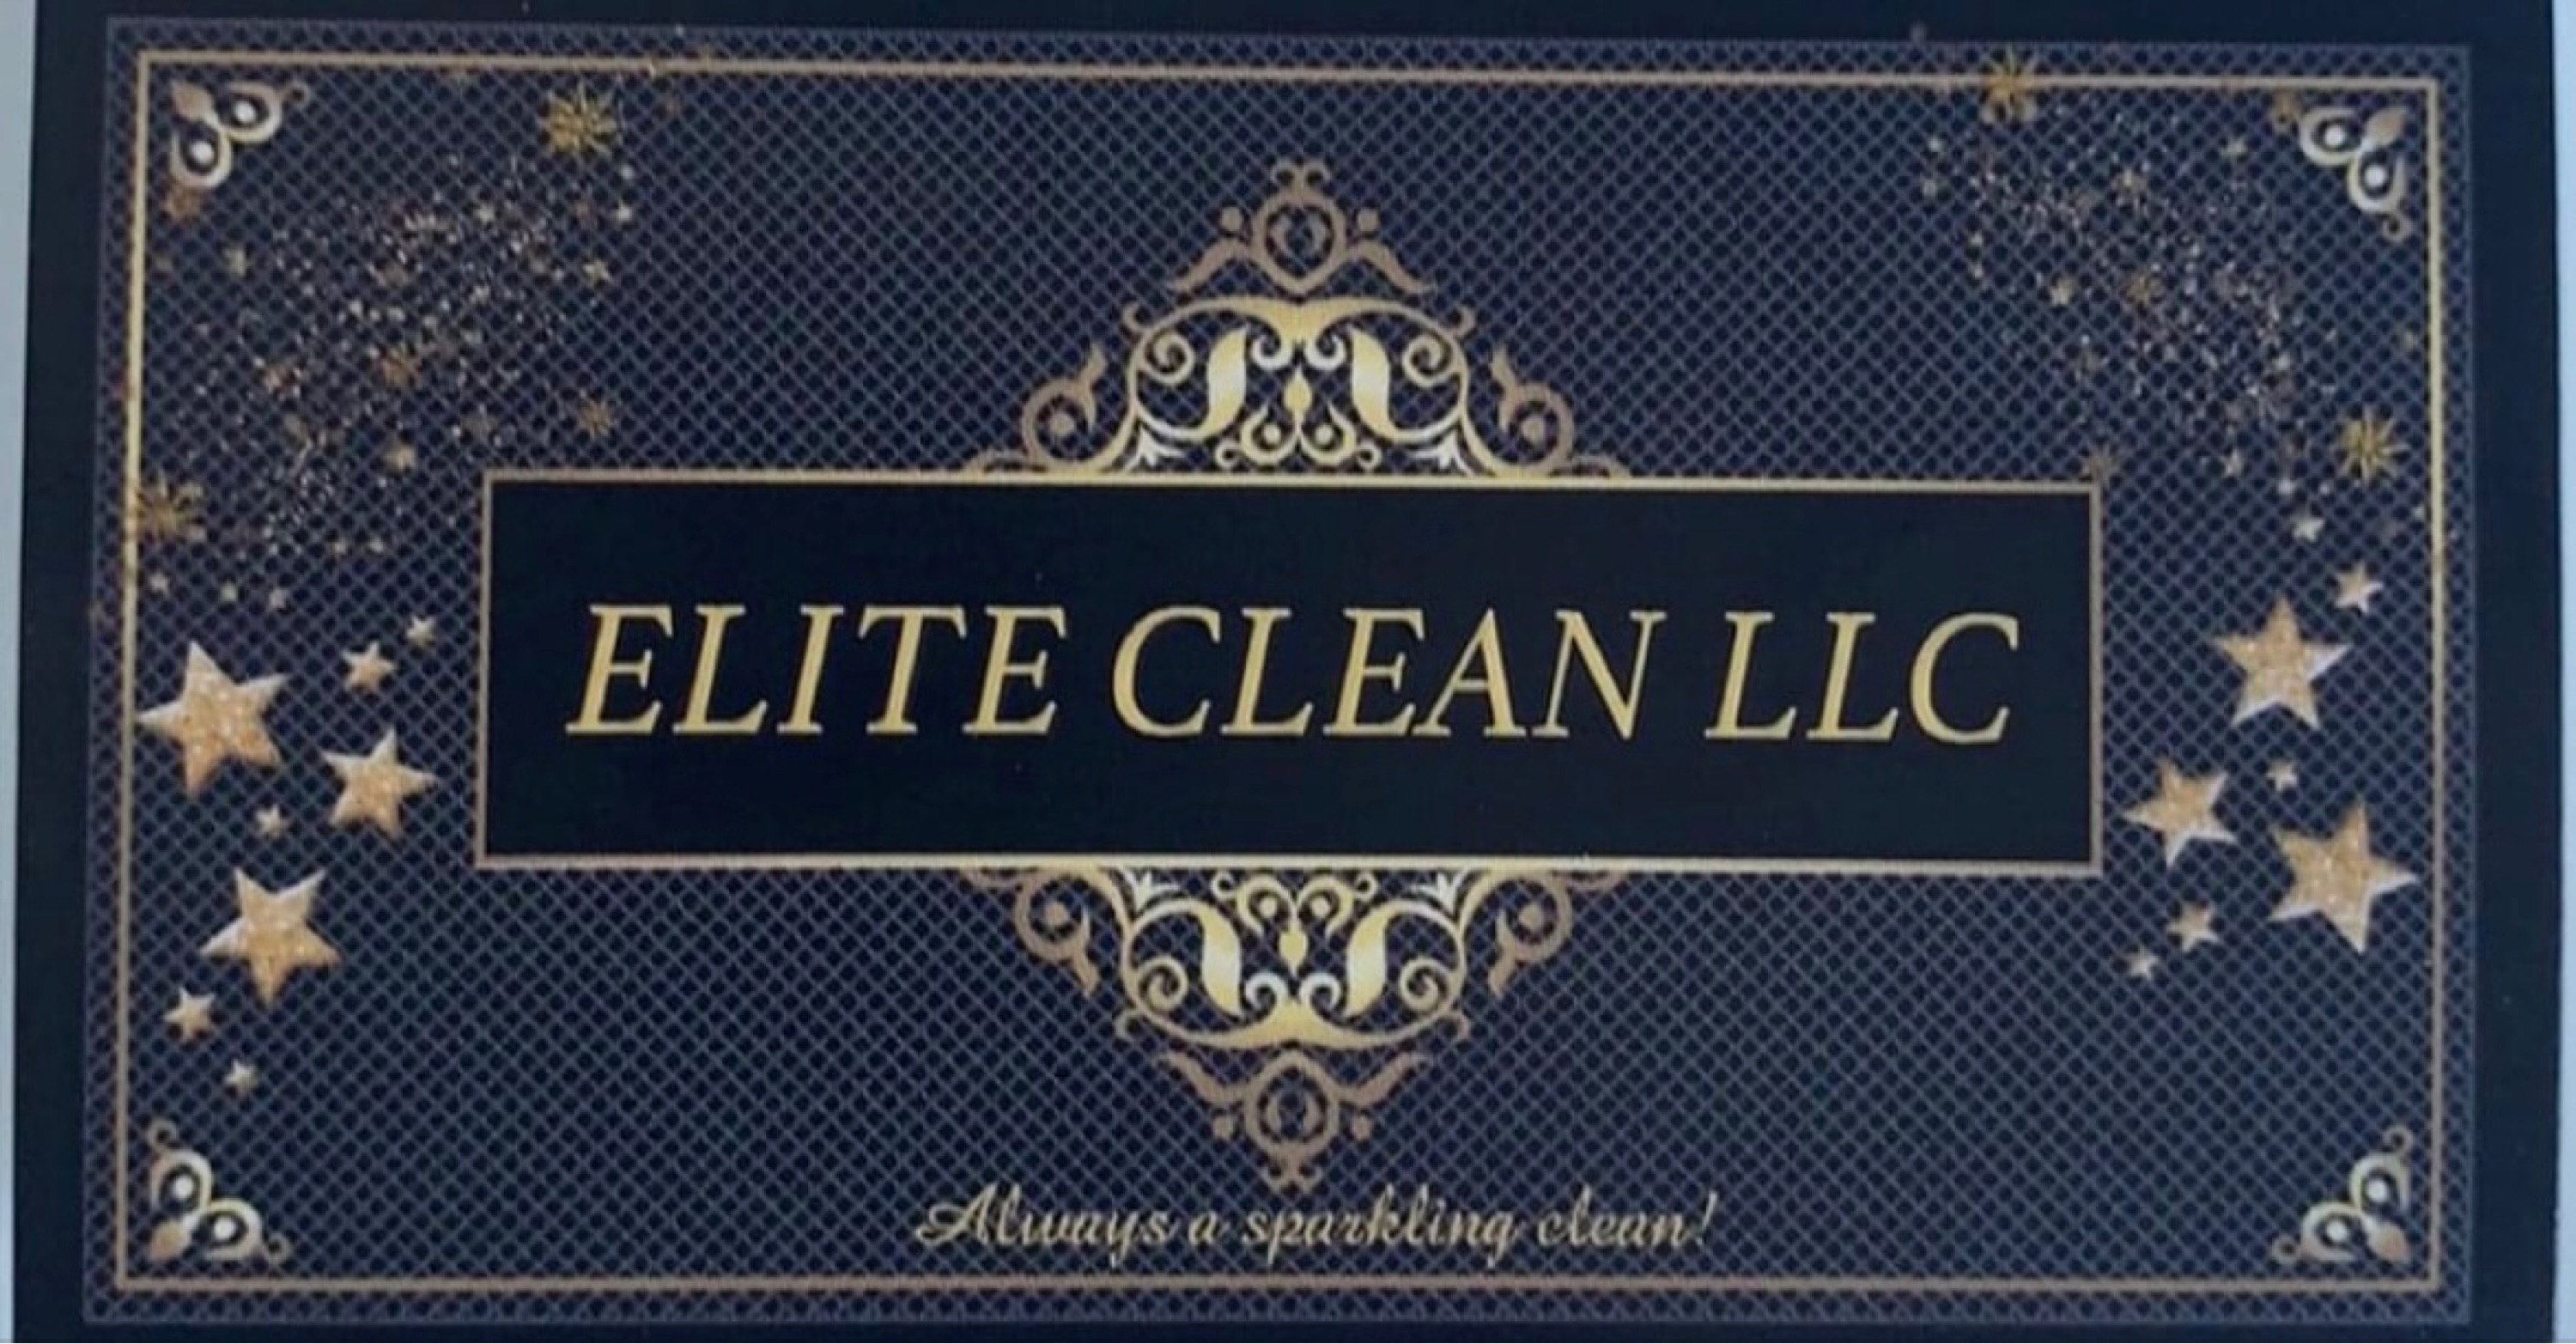 Elite Clean Logo